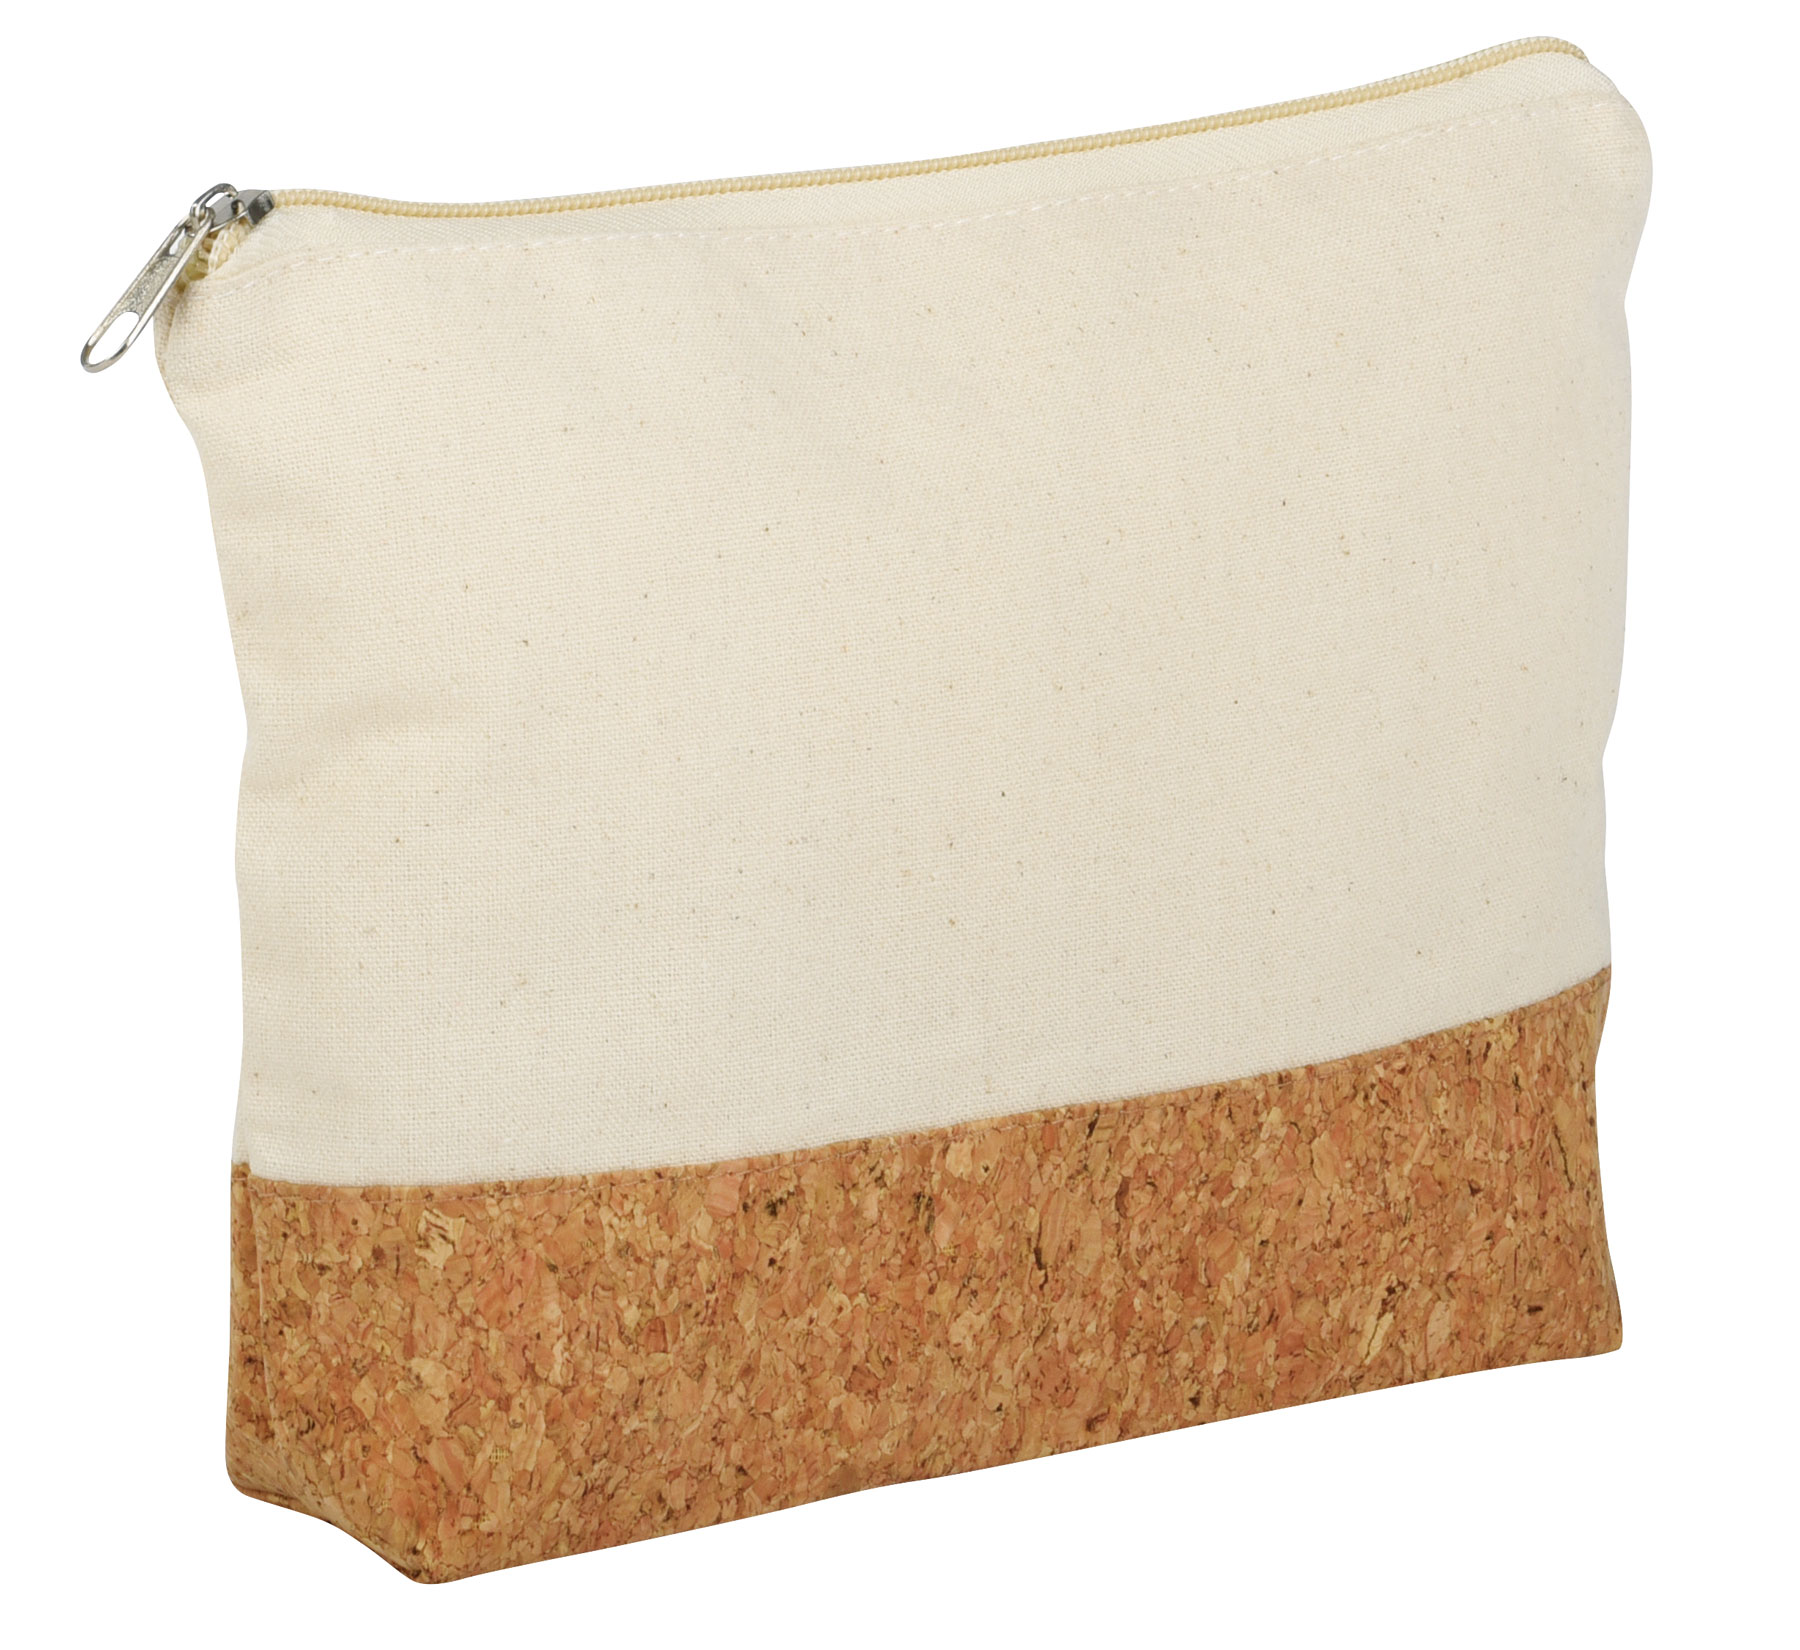 Accessory bag CORK USE - brown